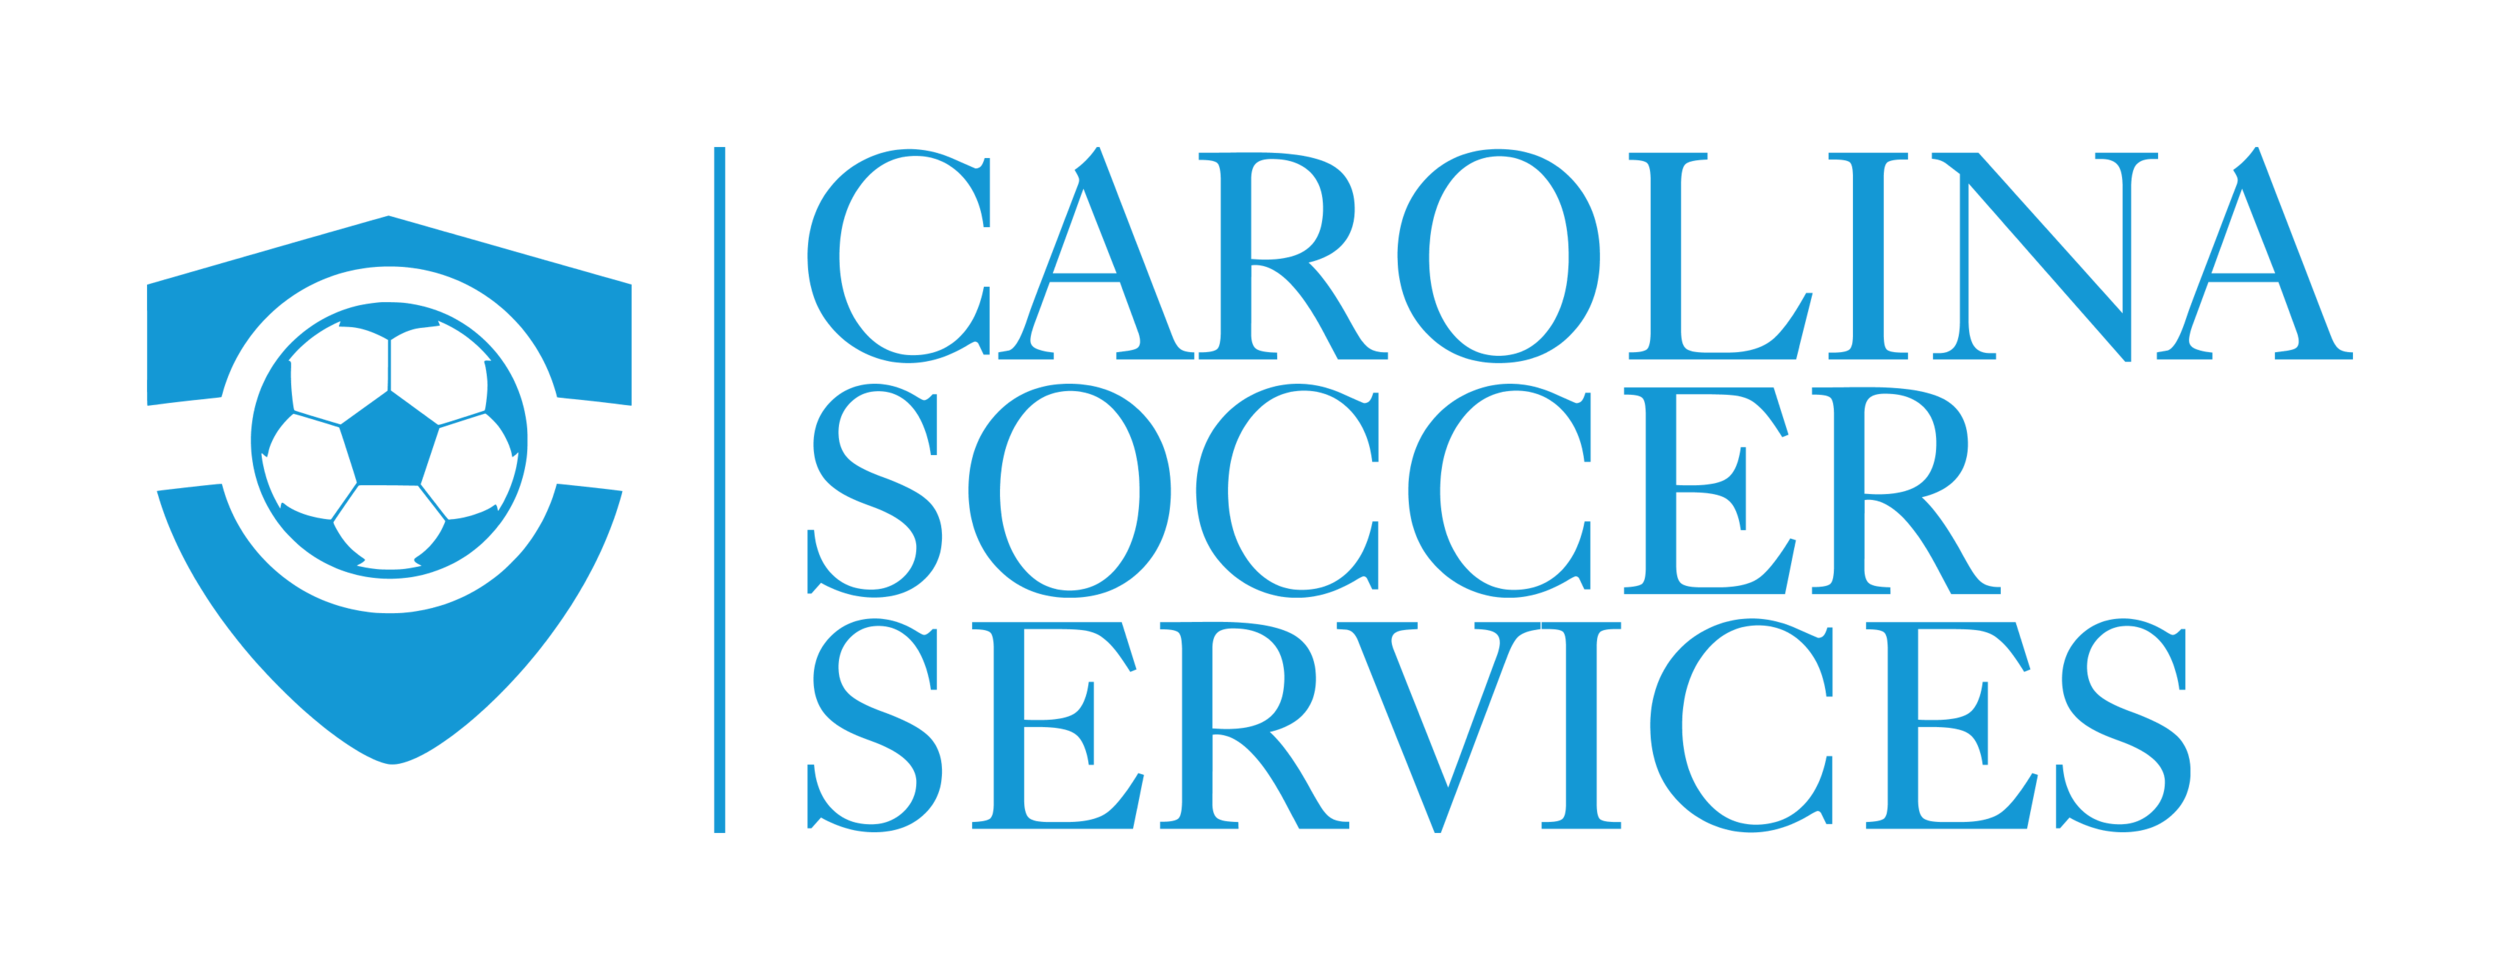 Carolina Soccer Services